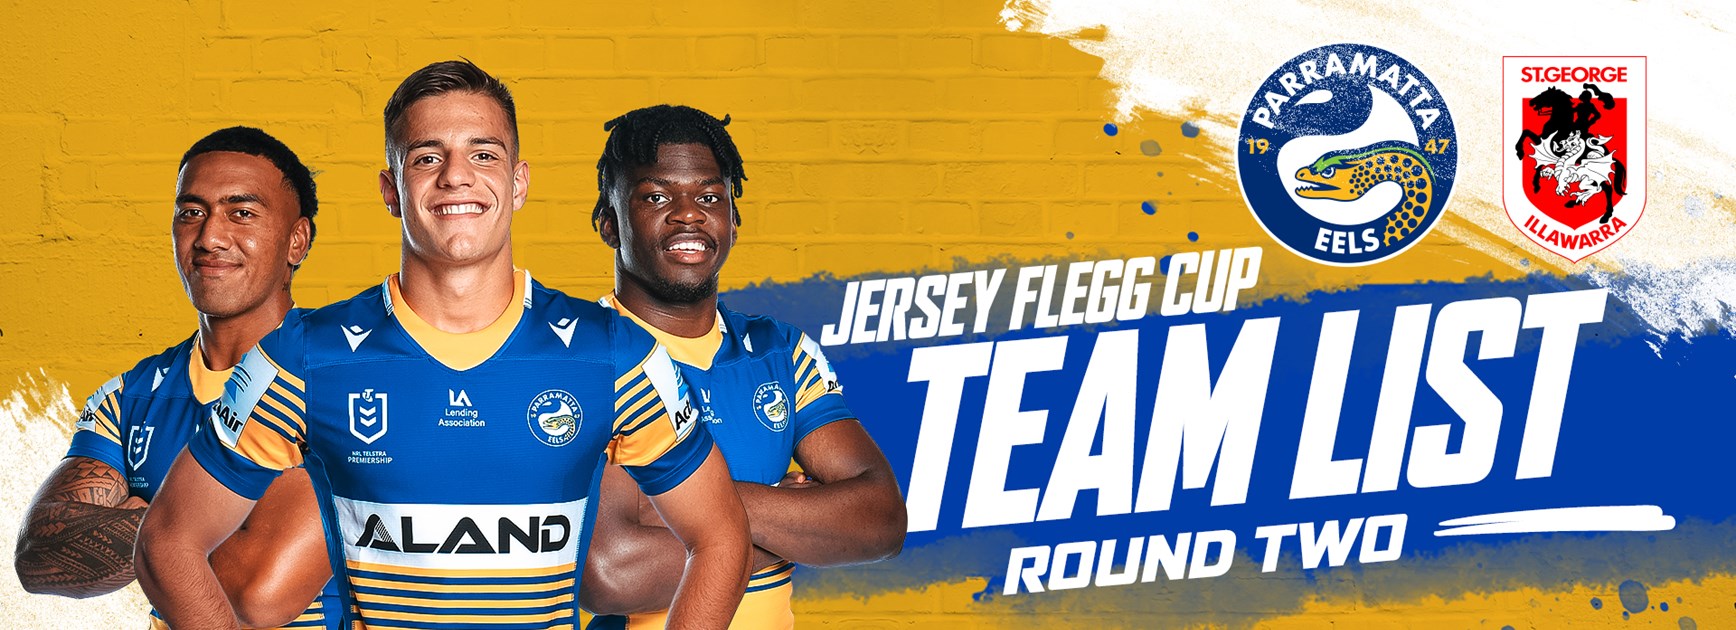 Jersey Flegg Team List - Eels v Dragons, Round Two